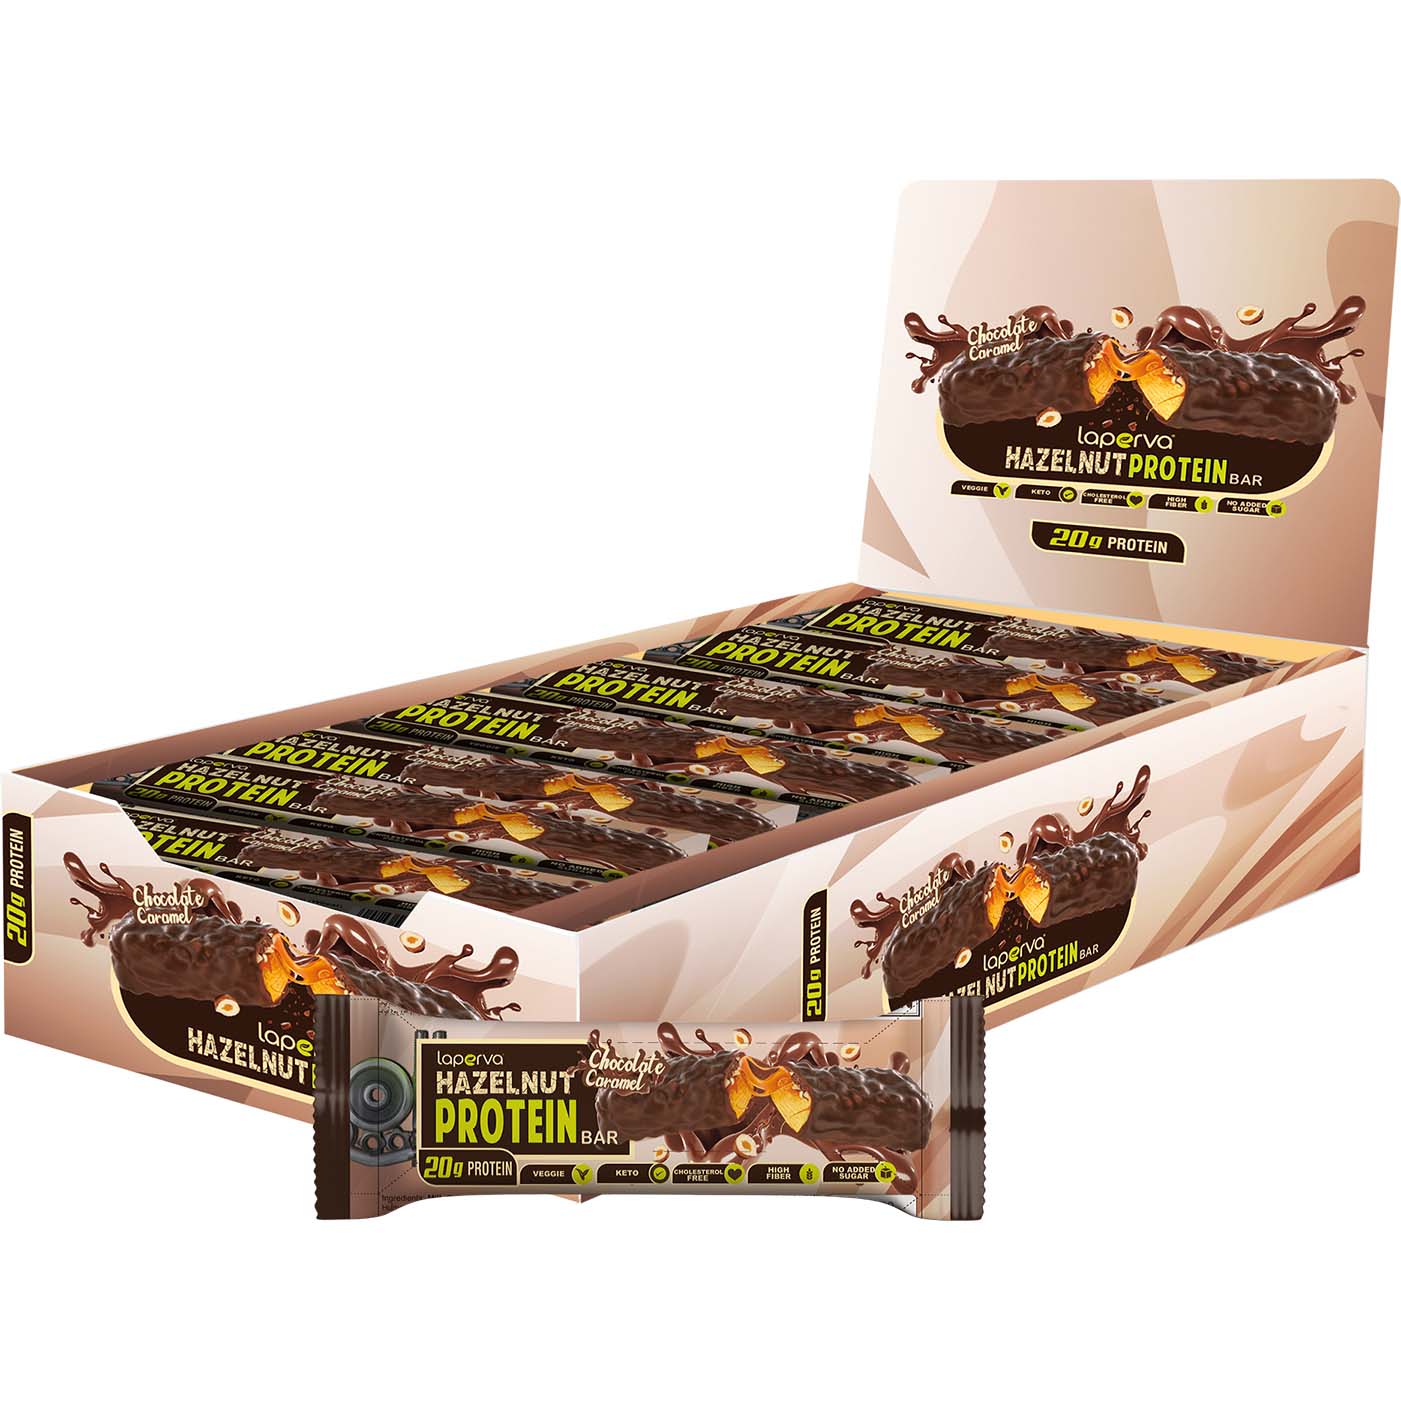 Laperva Hazelnut Protein Bar Box of 18 Bars Hazelnut Caramel